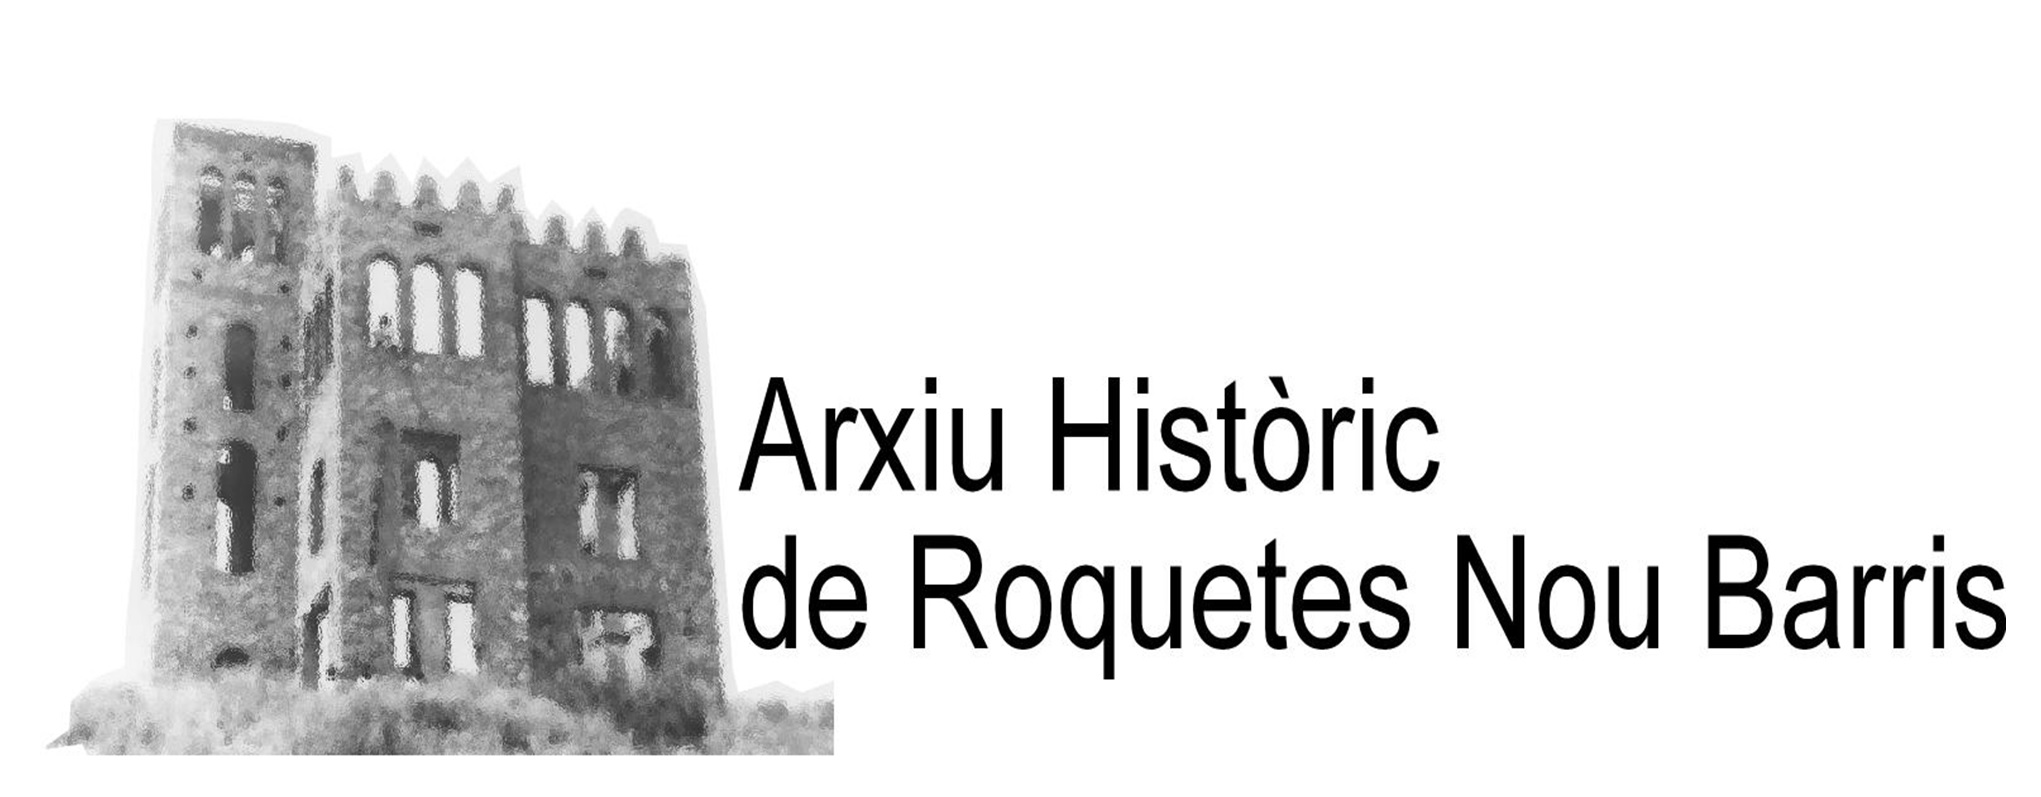 Arxiu històric Roquetes Nou Barris